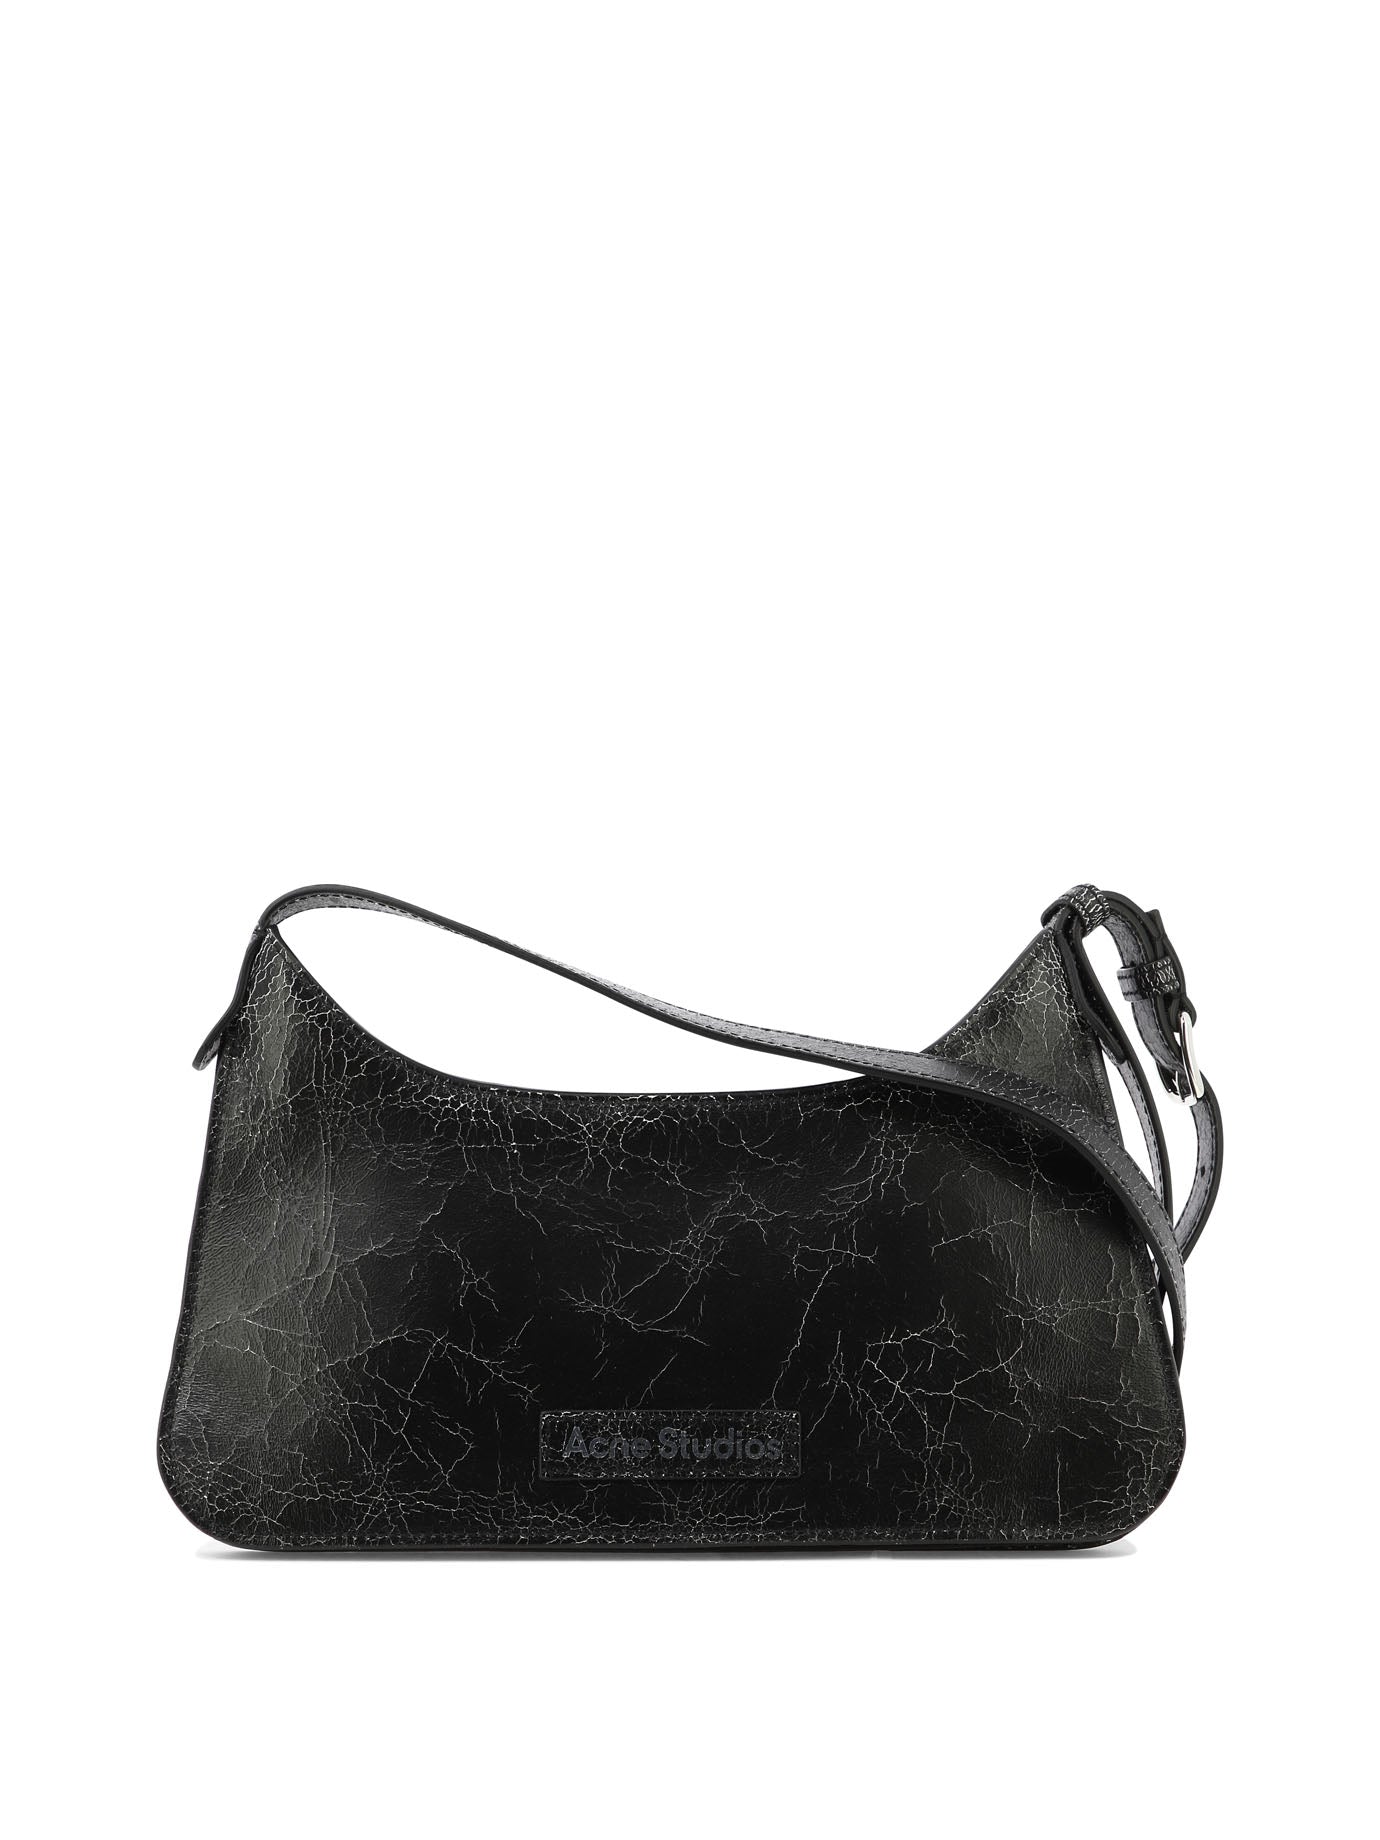 Acne Studios Stylish Black Shoulder Handbag For Women